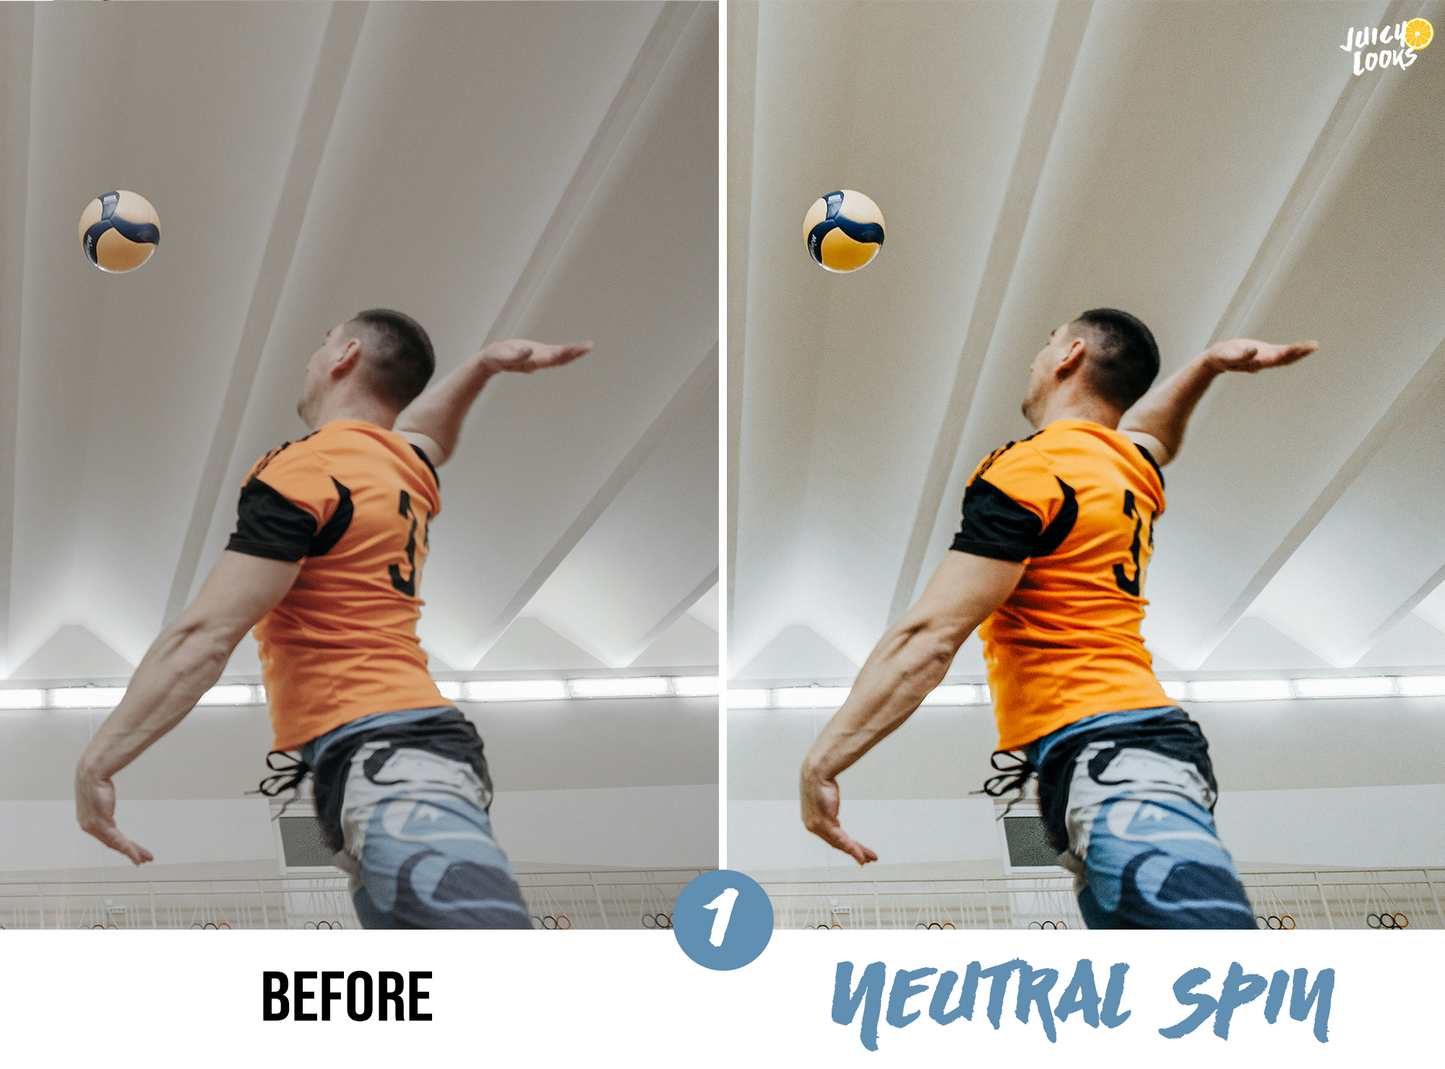 Volleyball Lightroom Presets for Mobile & Desktop - Juicy Looks Presets